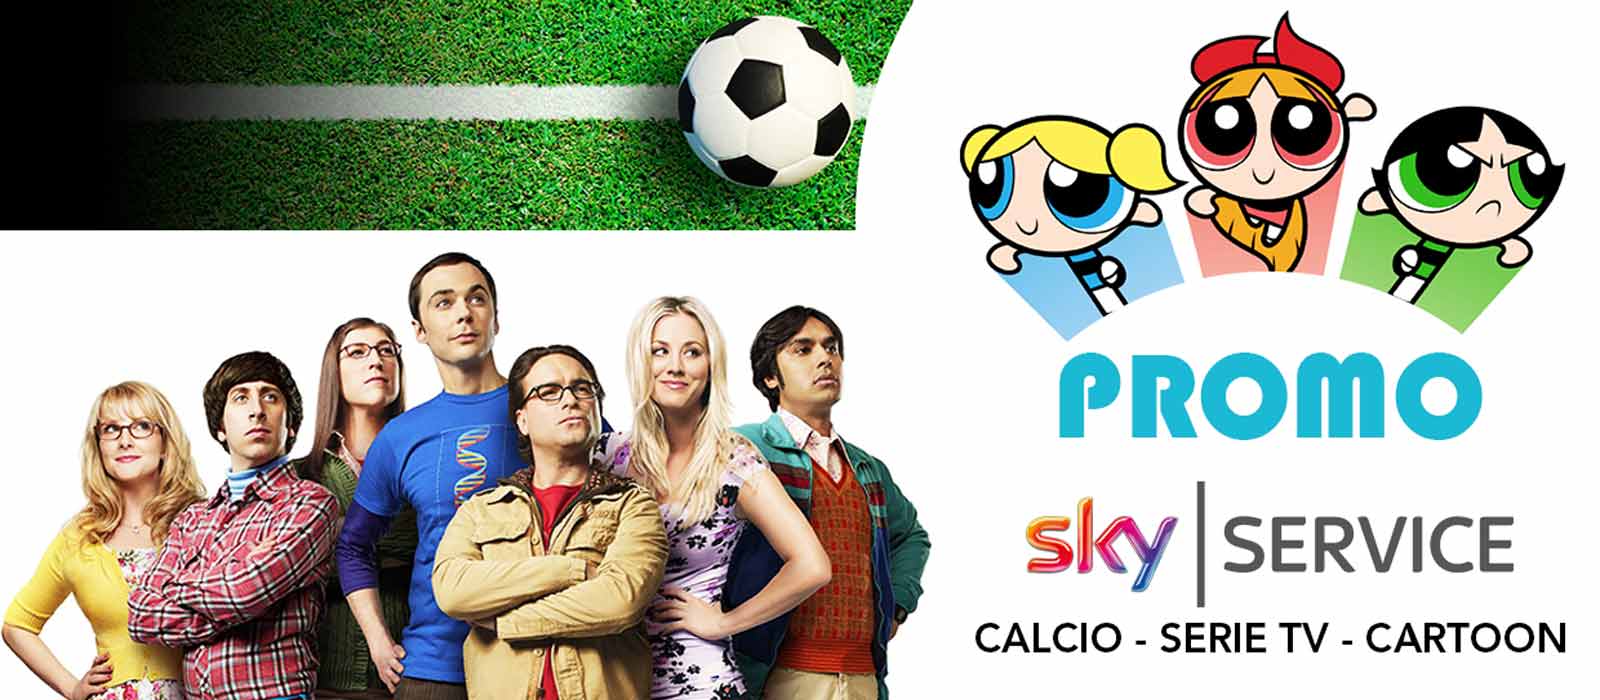 Promozione Sky - Calcio, serie TV, Cartoon